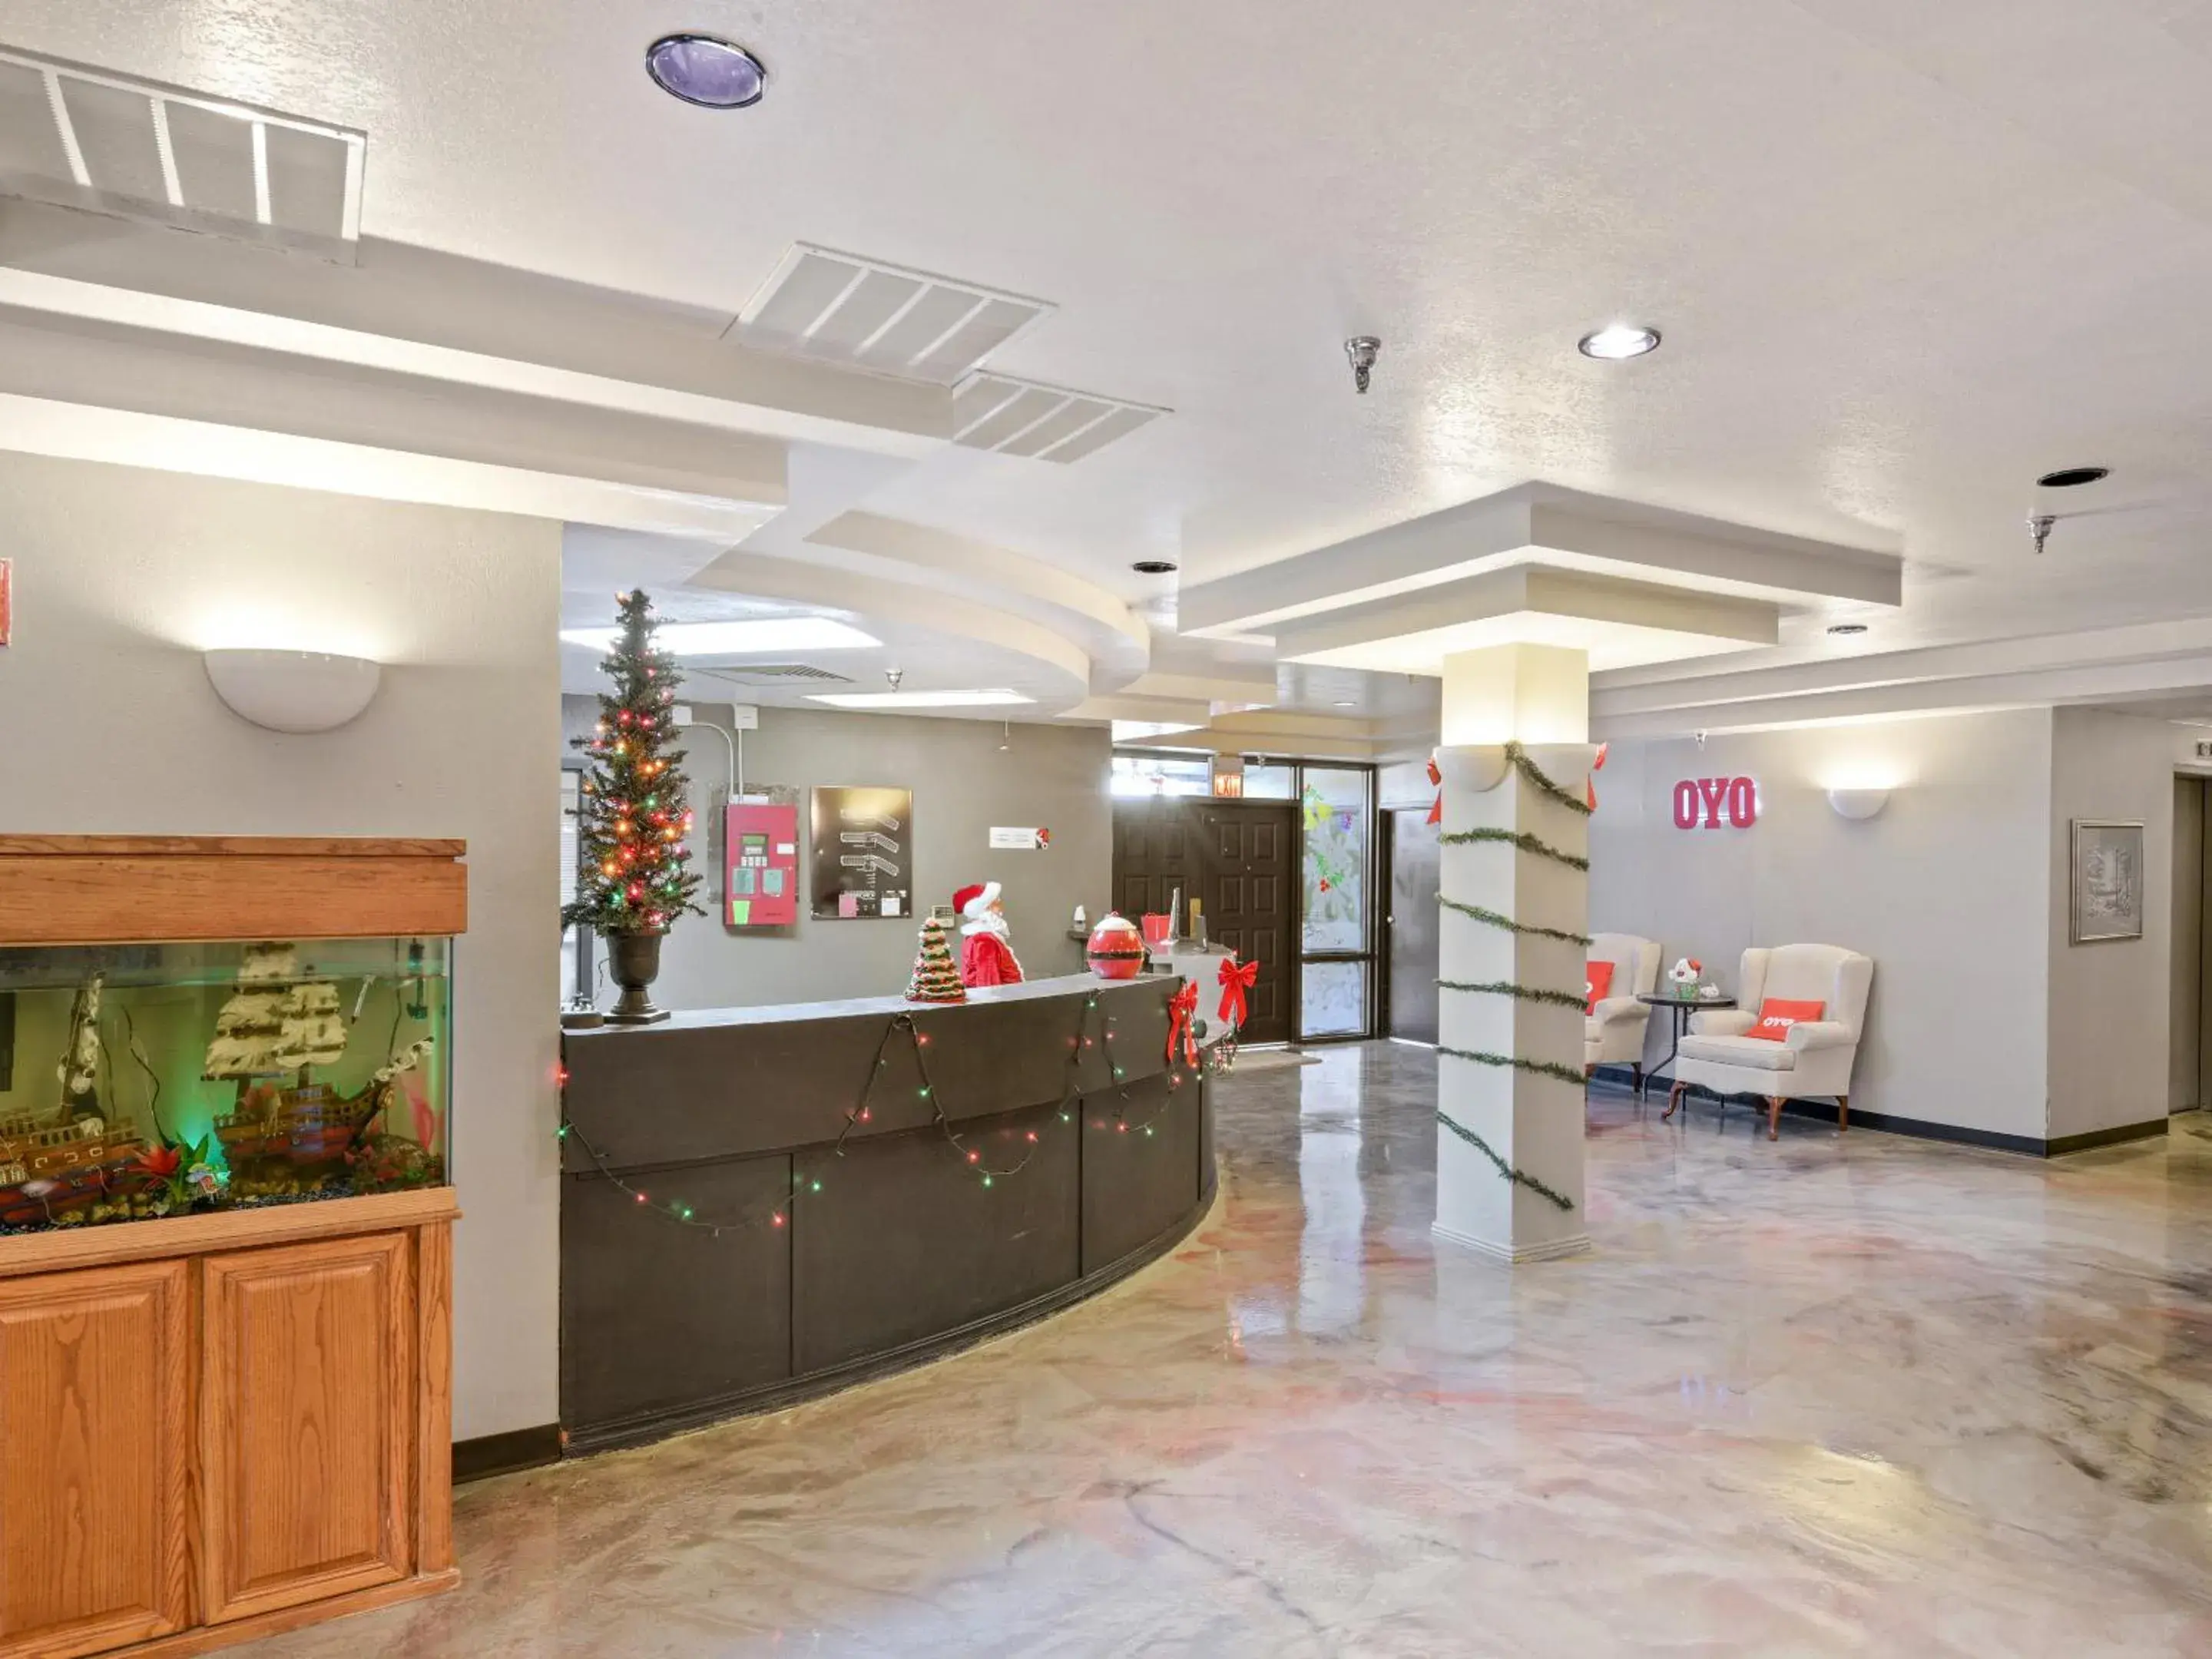 Lobby or reception in OYO Hotel Edmond - University of Central Oklahoma